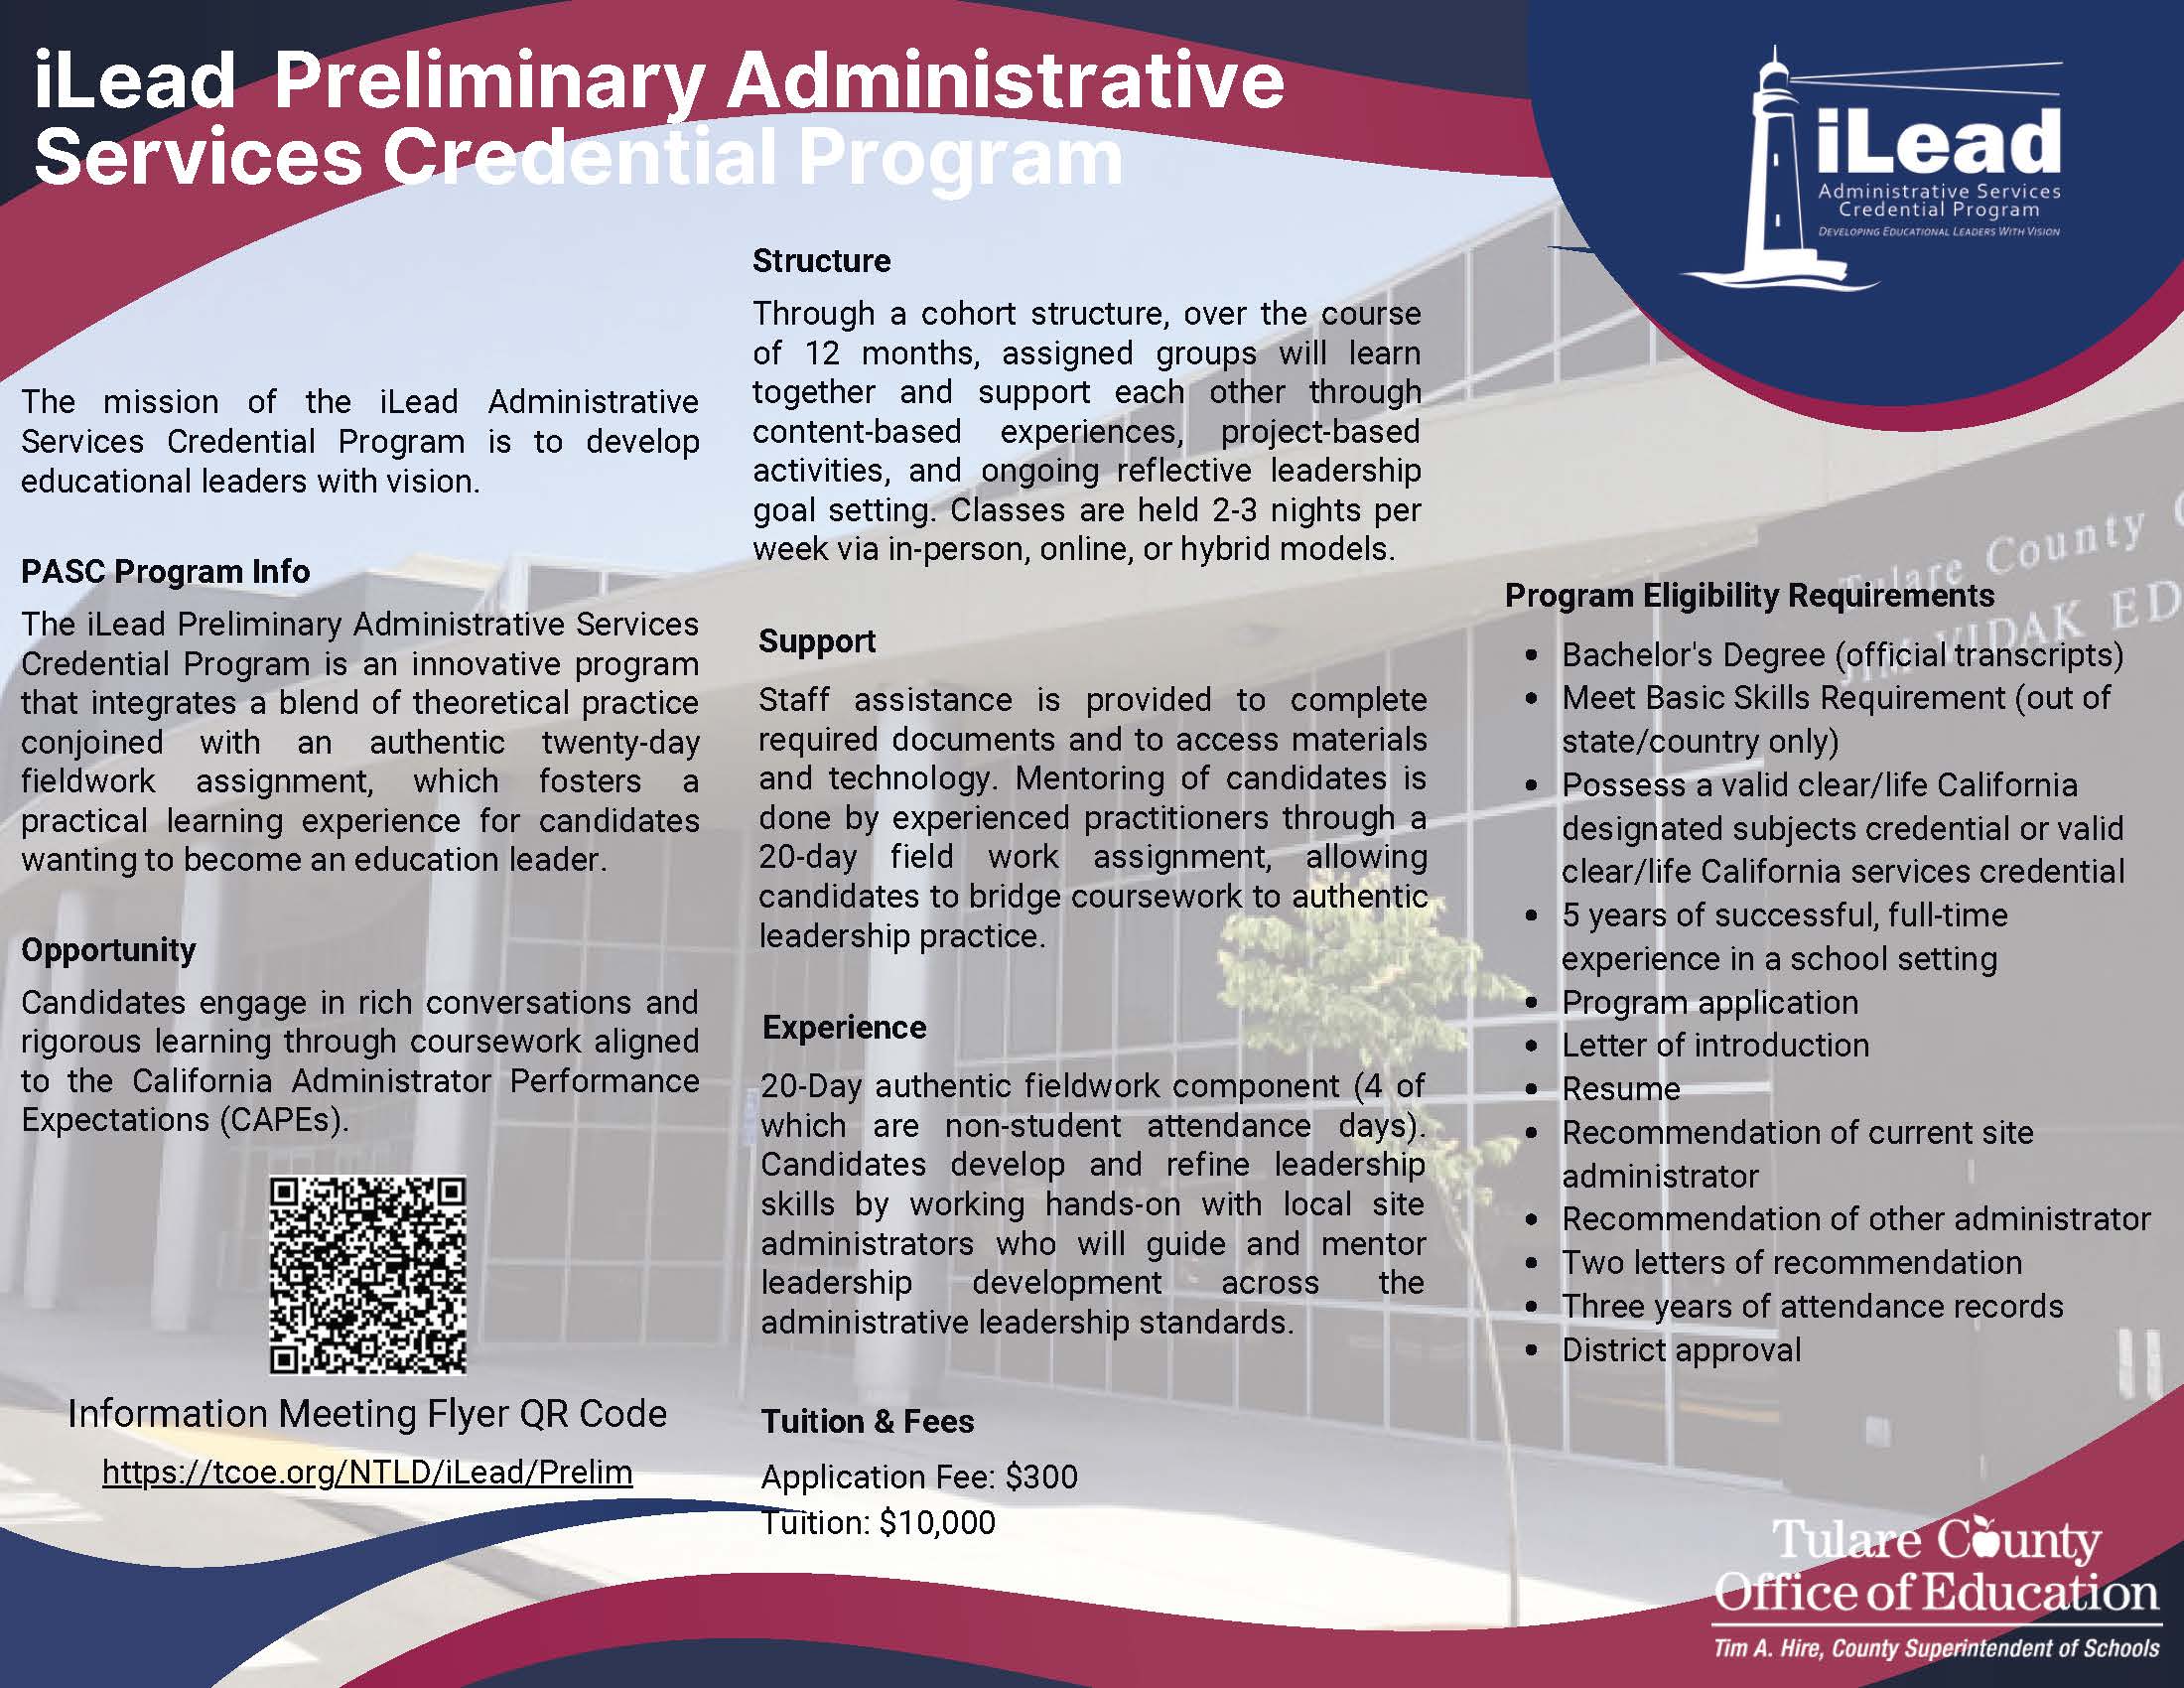 iLead Preliminary Administrative Services Credential Program Flyer